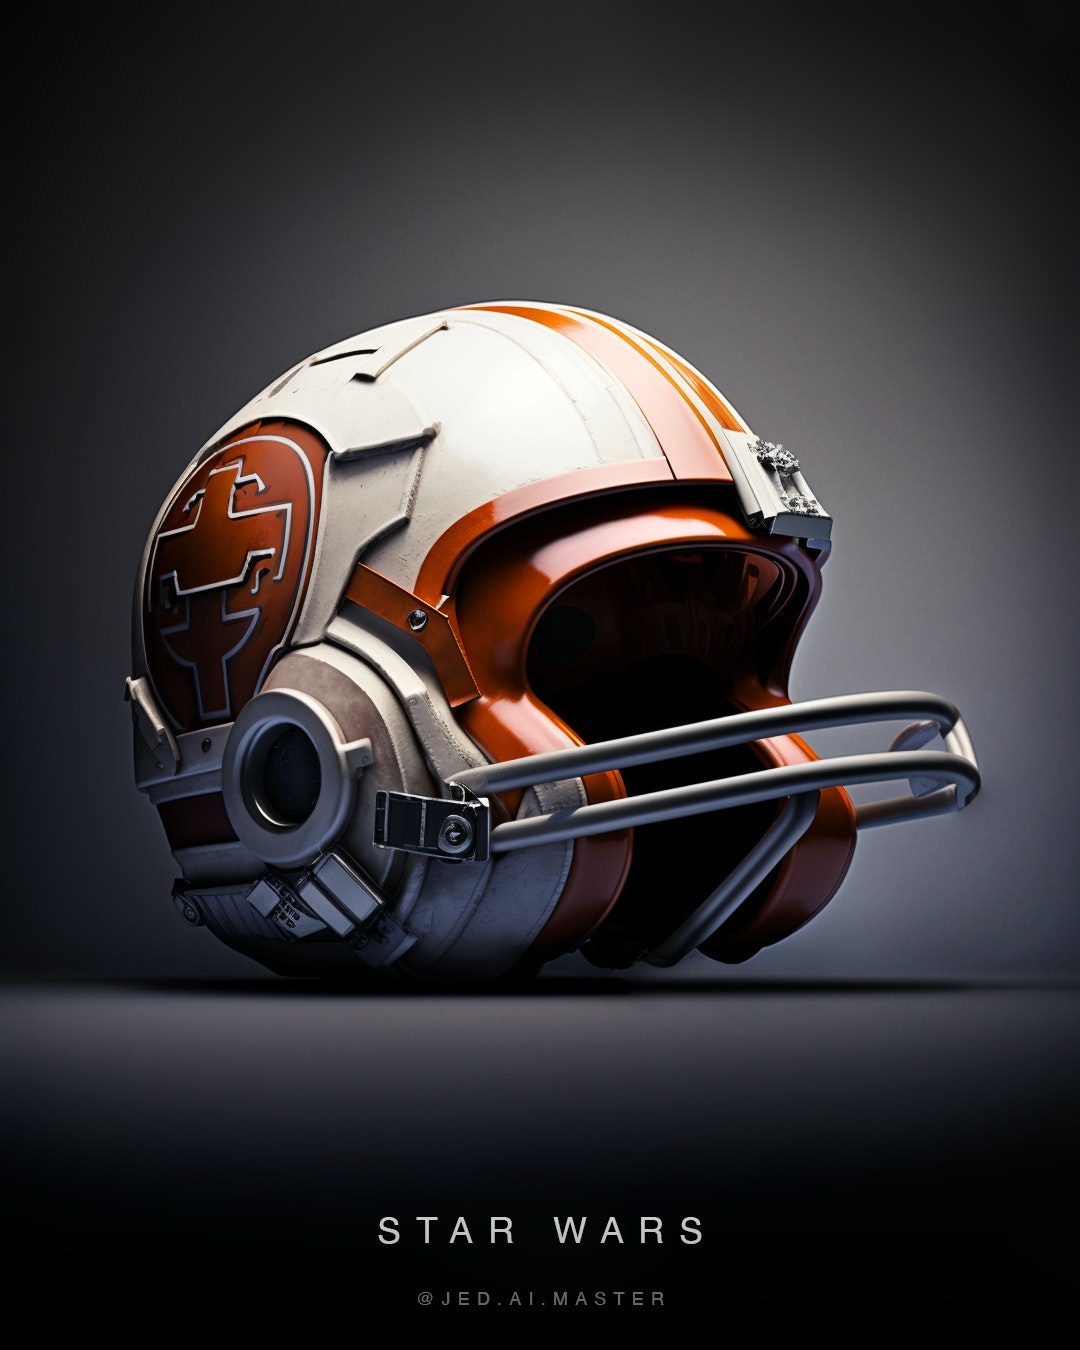 Star Wars Football Helm